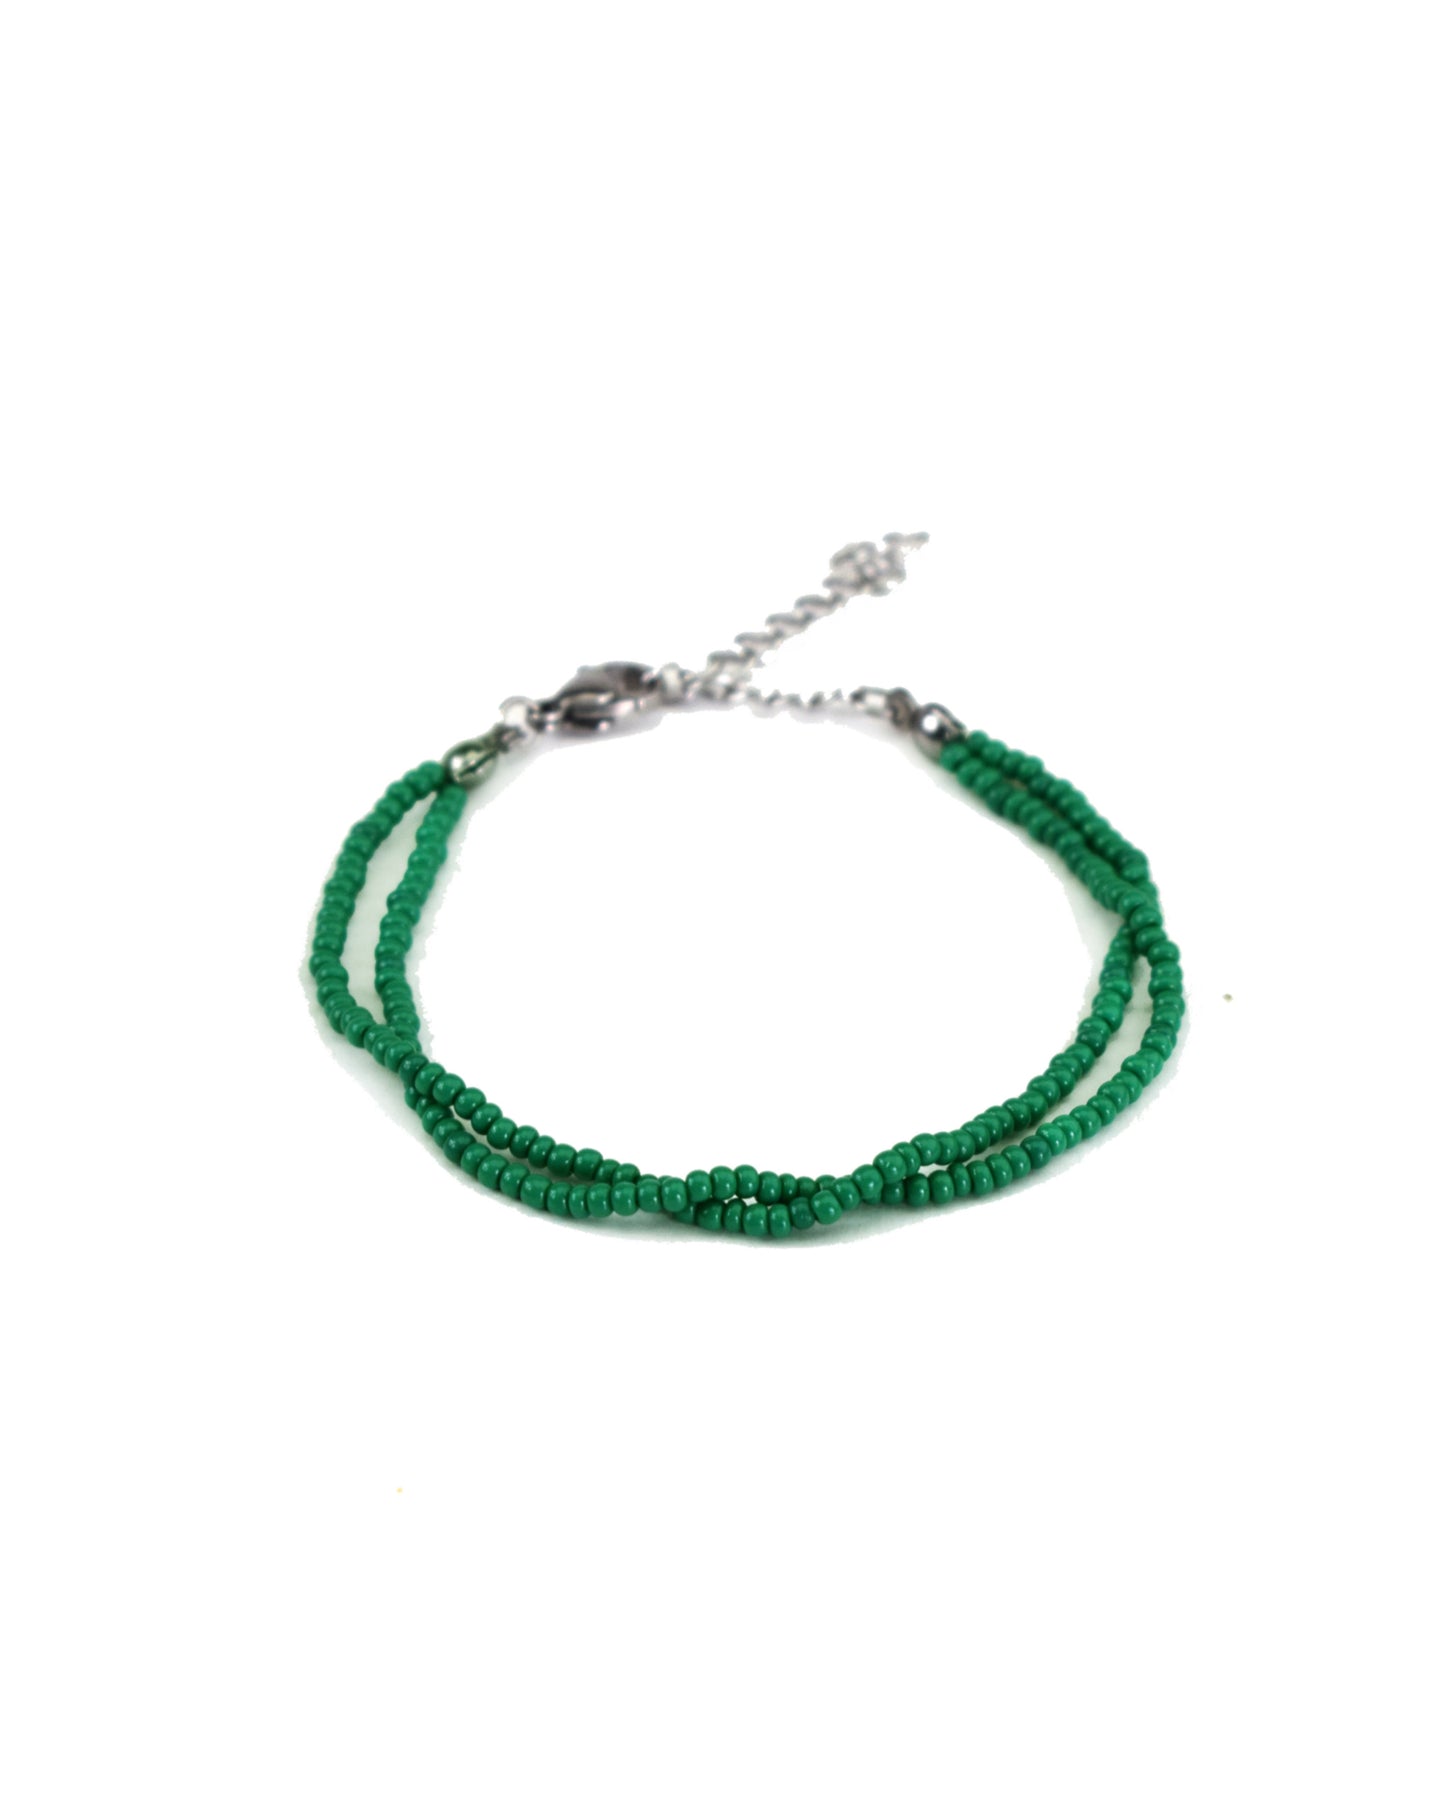 Double Bracelet of Moss Green Beads